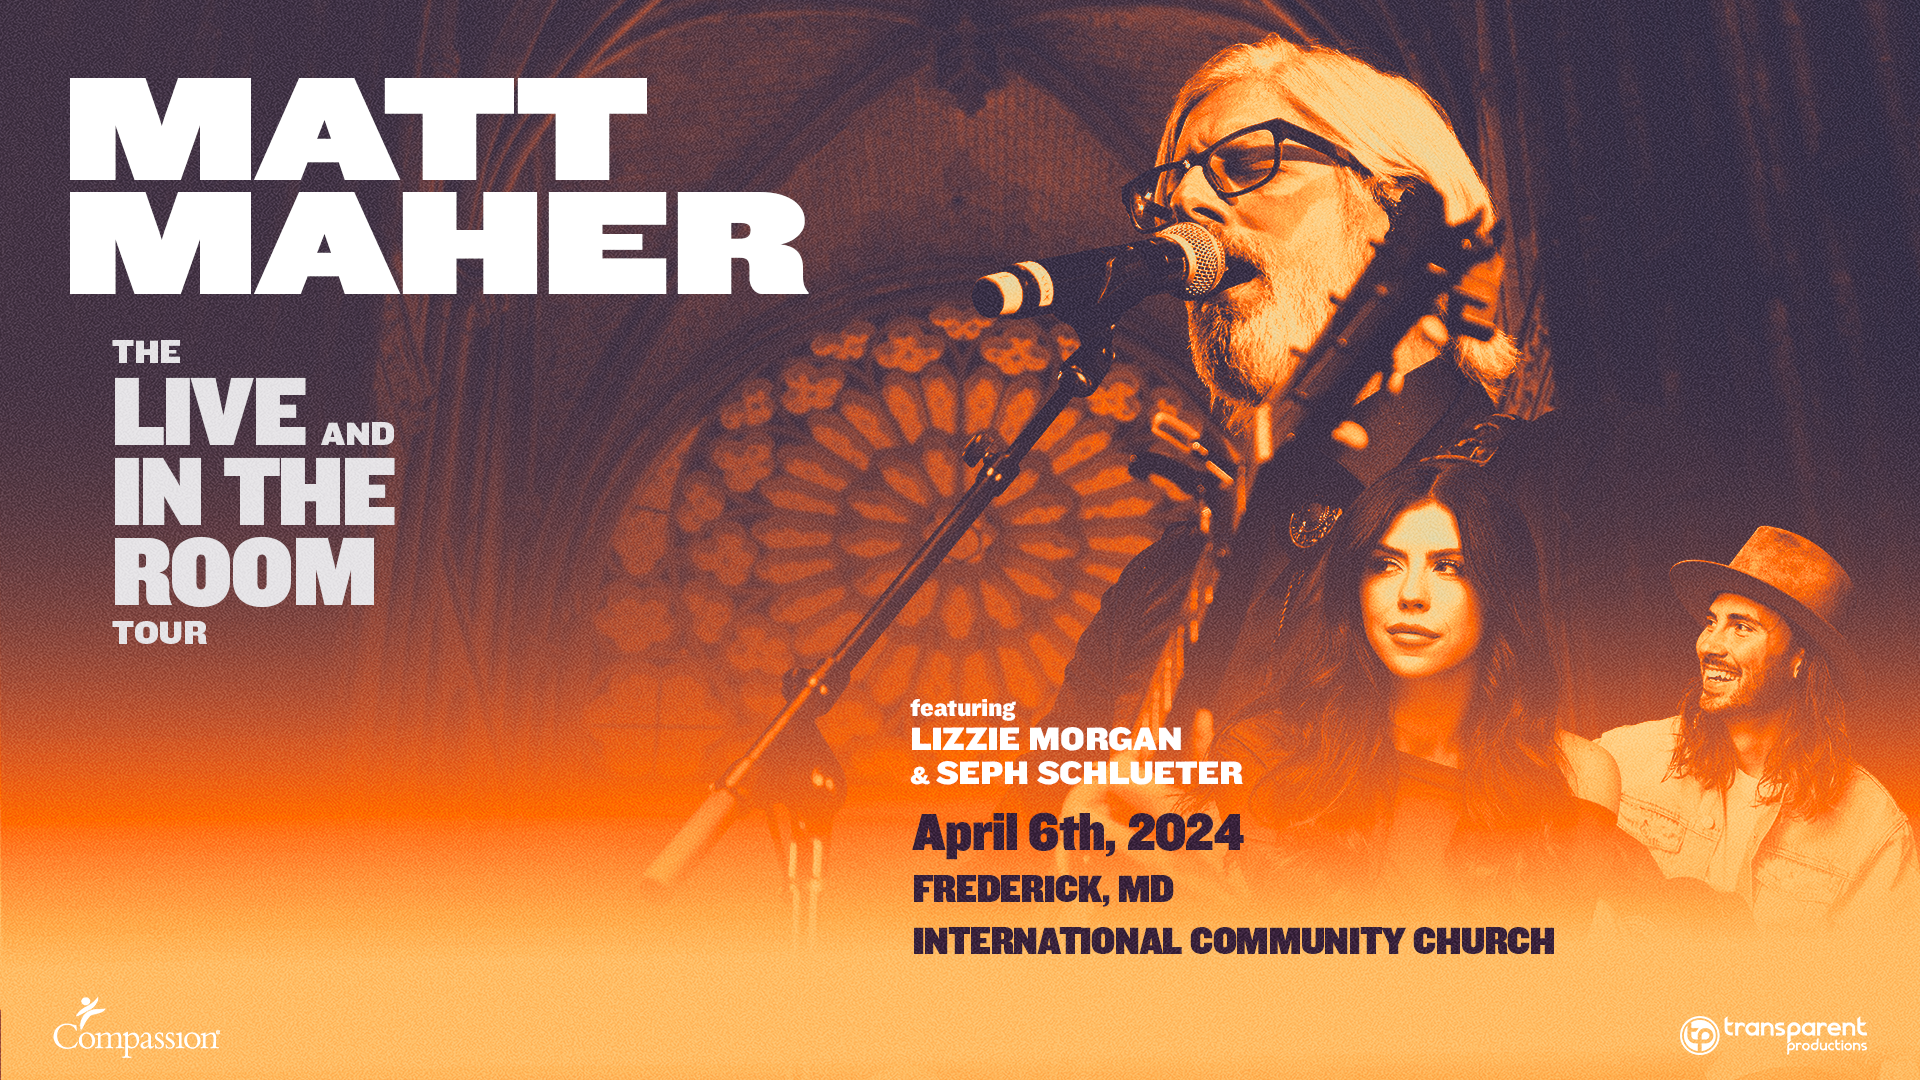 Matt Maher Concert at International Community Church in Frederick, MD.